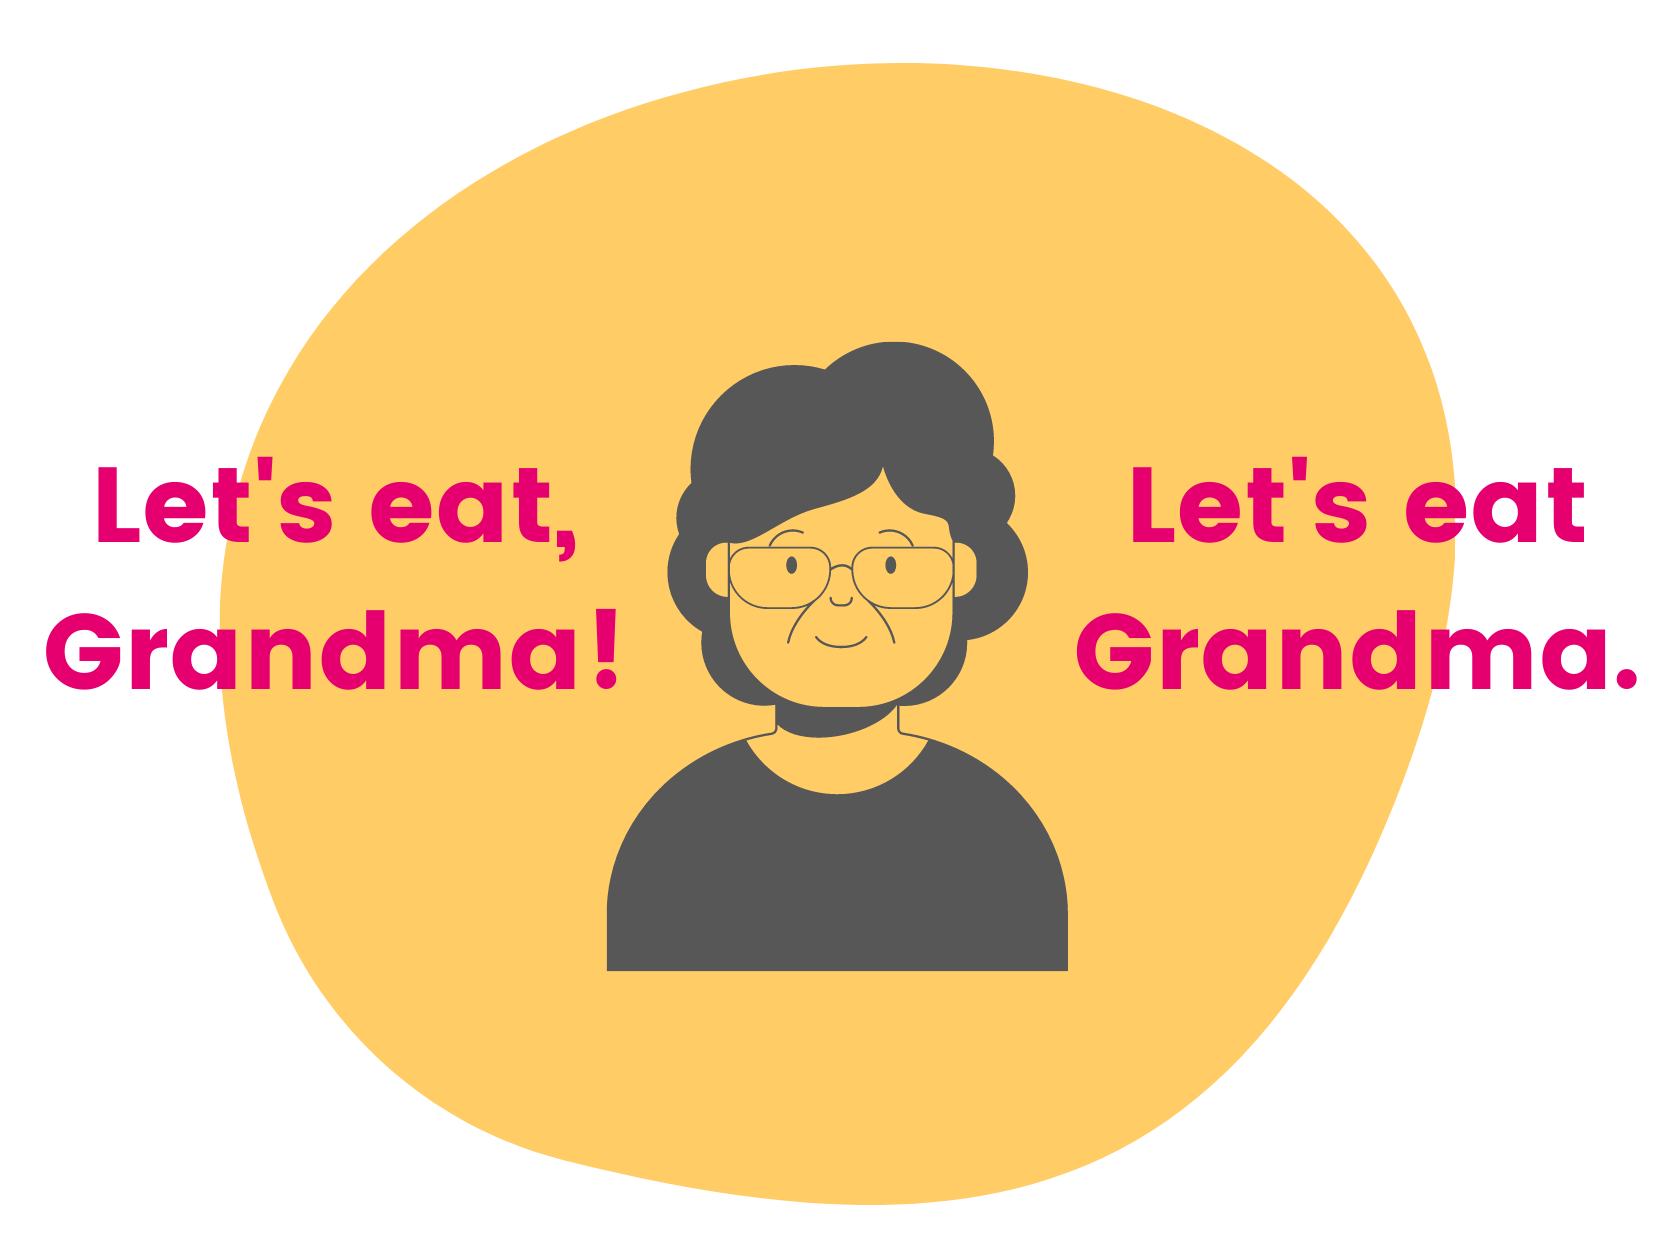 Grammatical comparison of Let's eat, Grandma! and Let's eat Grandma.